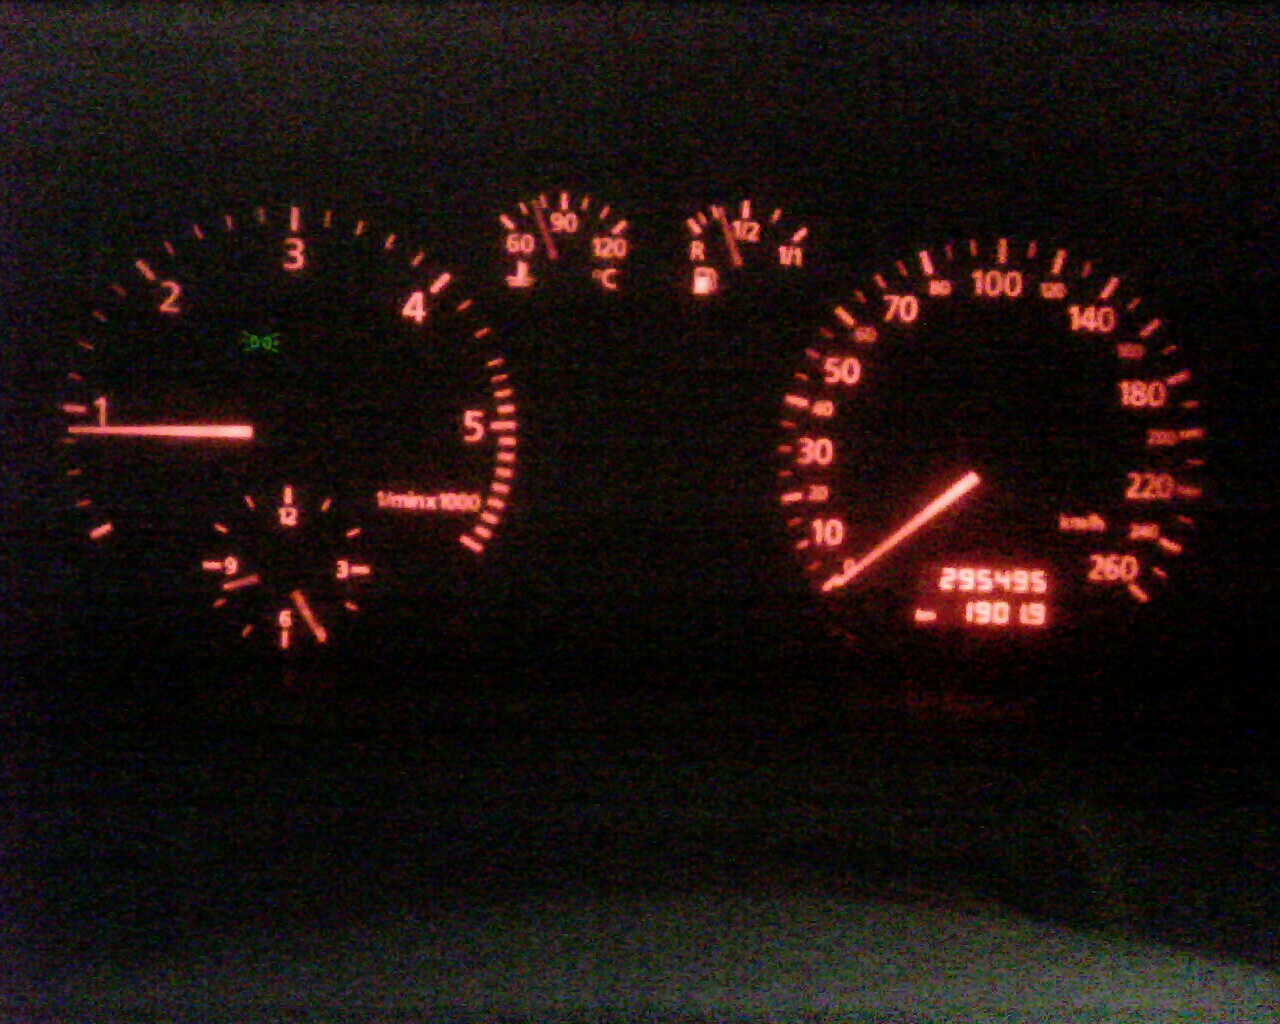 an illuminated gauge in the dash board of a car